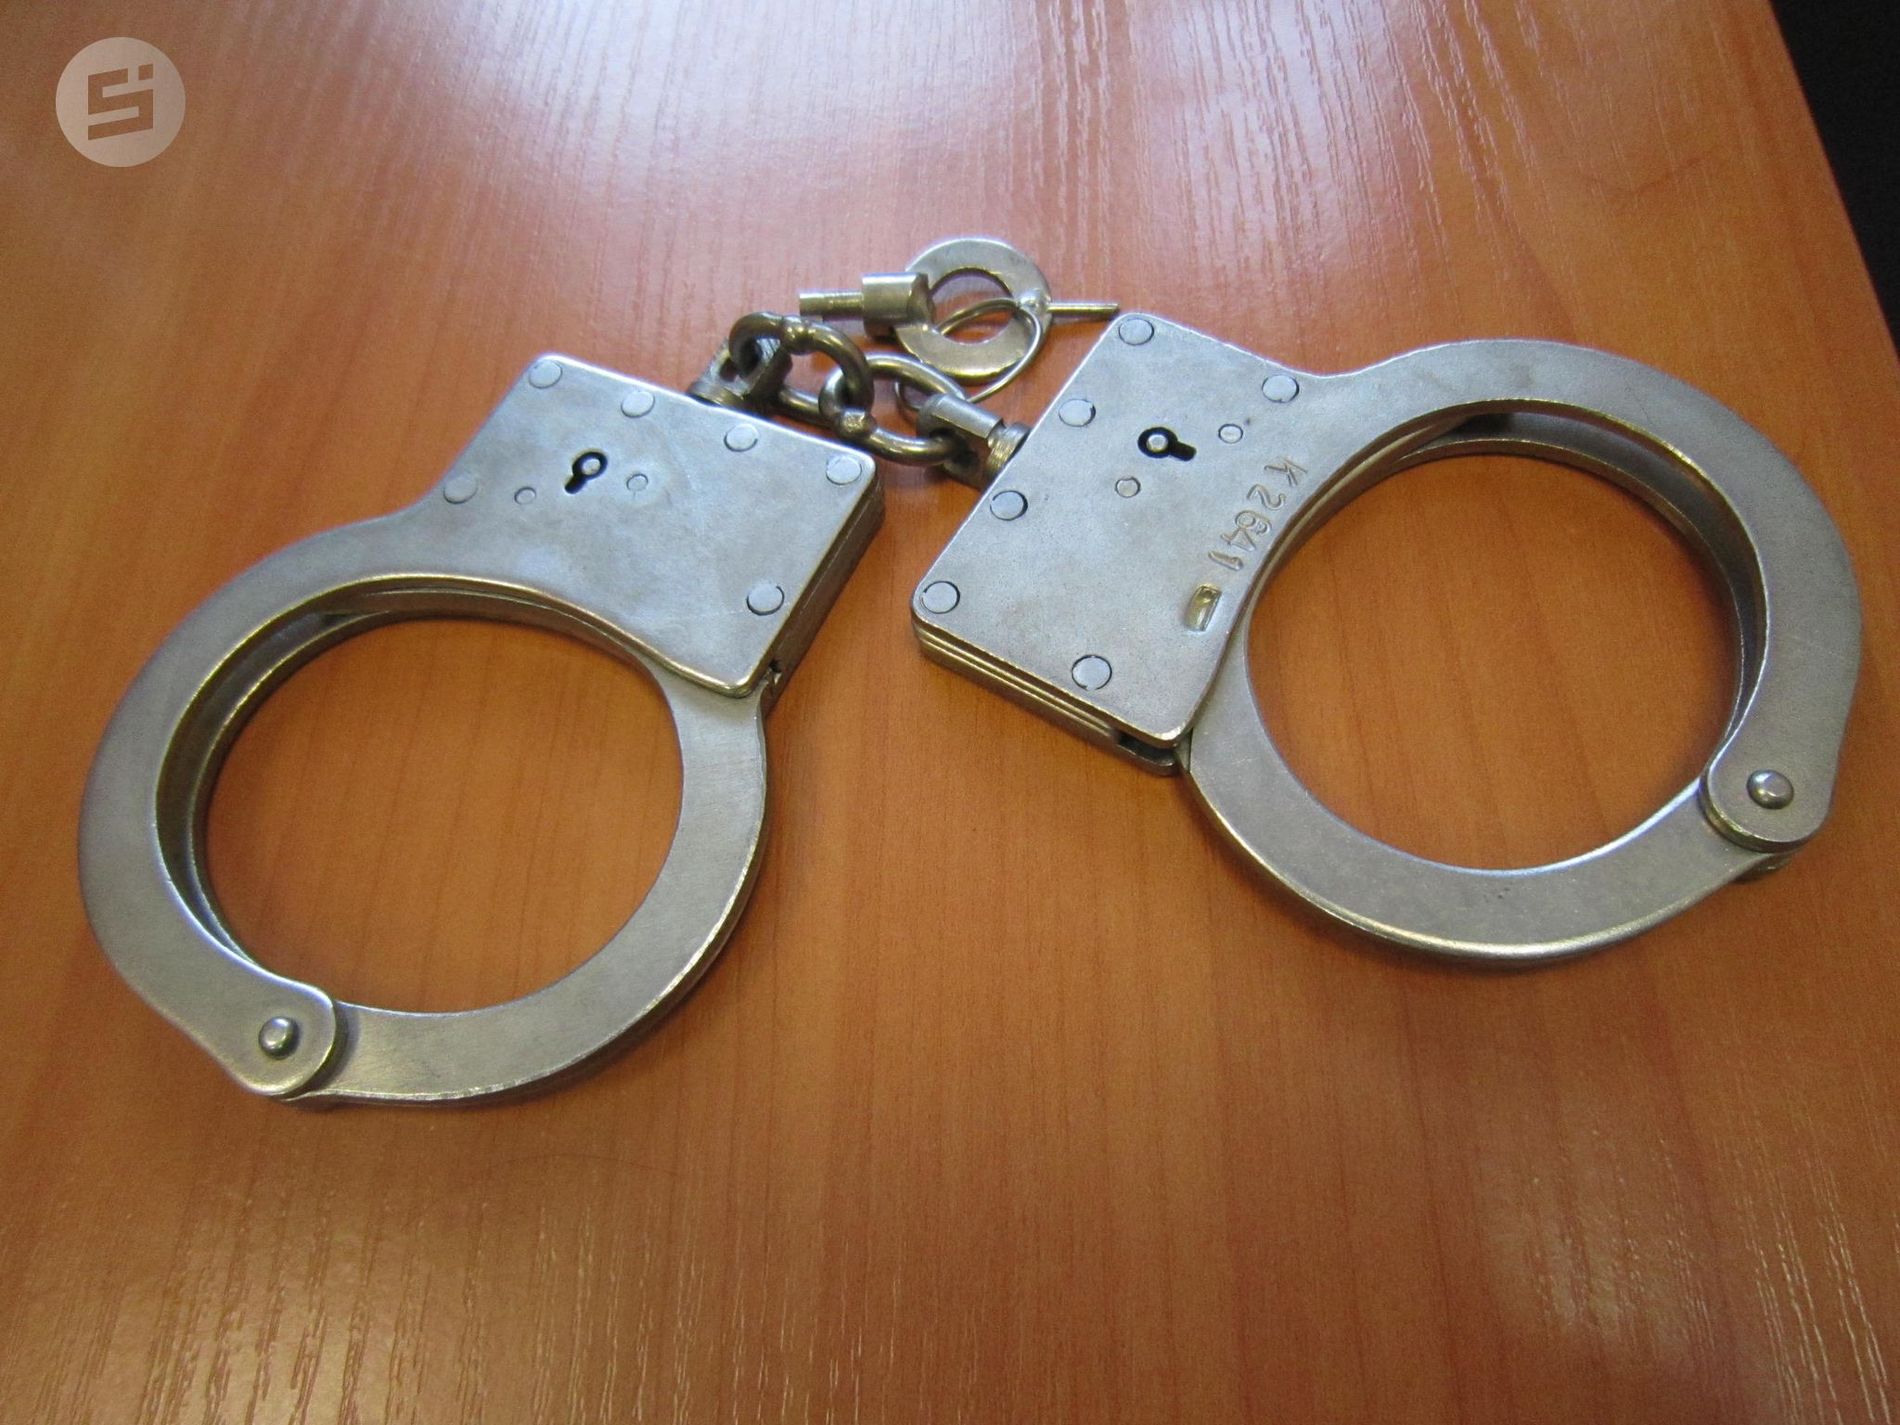 Более 3,5 кг конопли изъяли полицейские у пенсионера в Воткинске